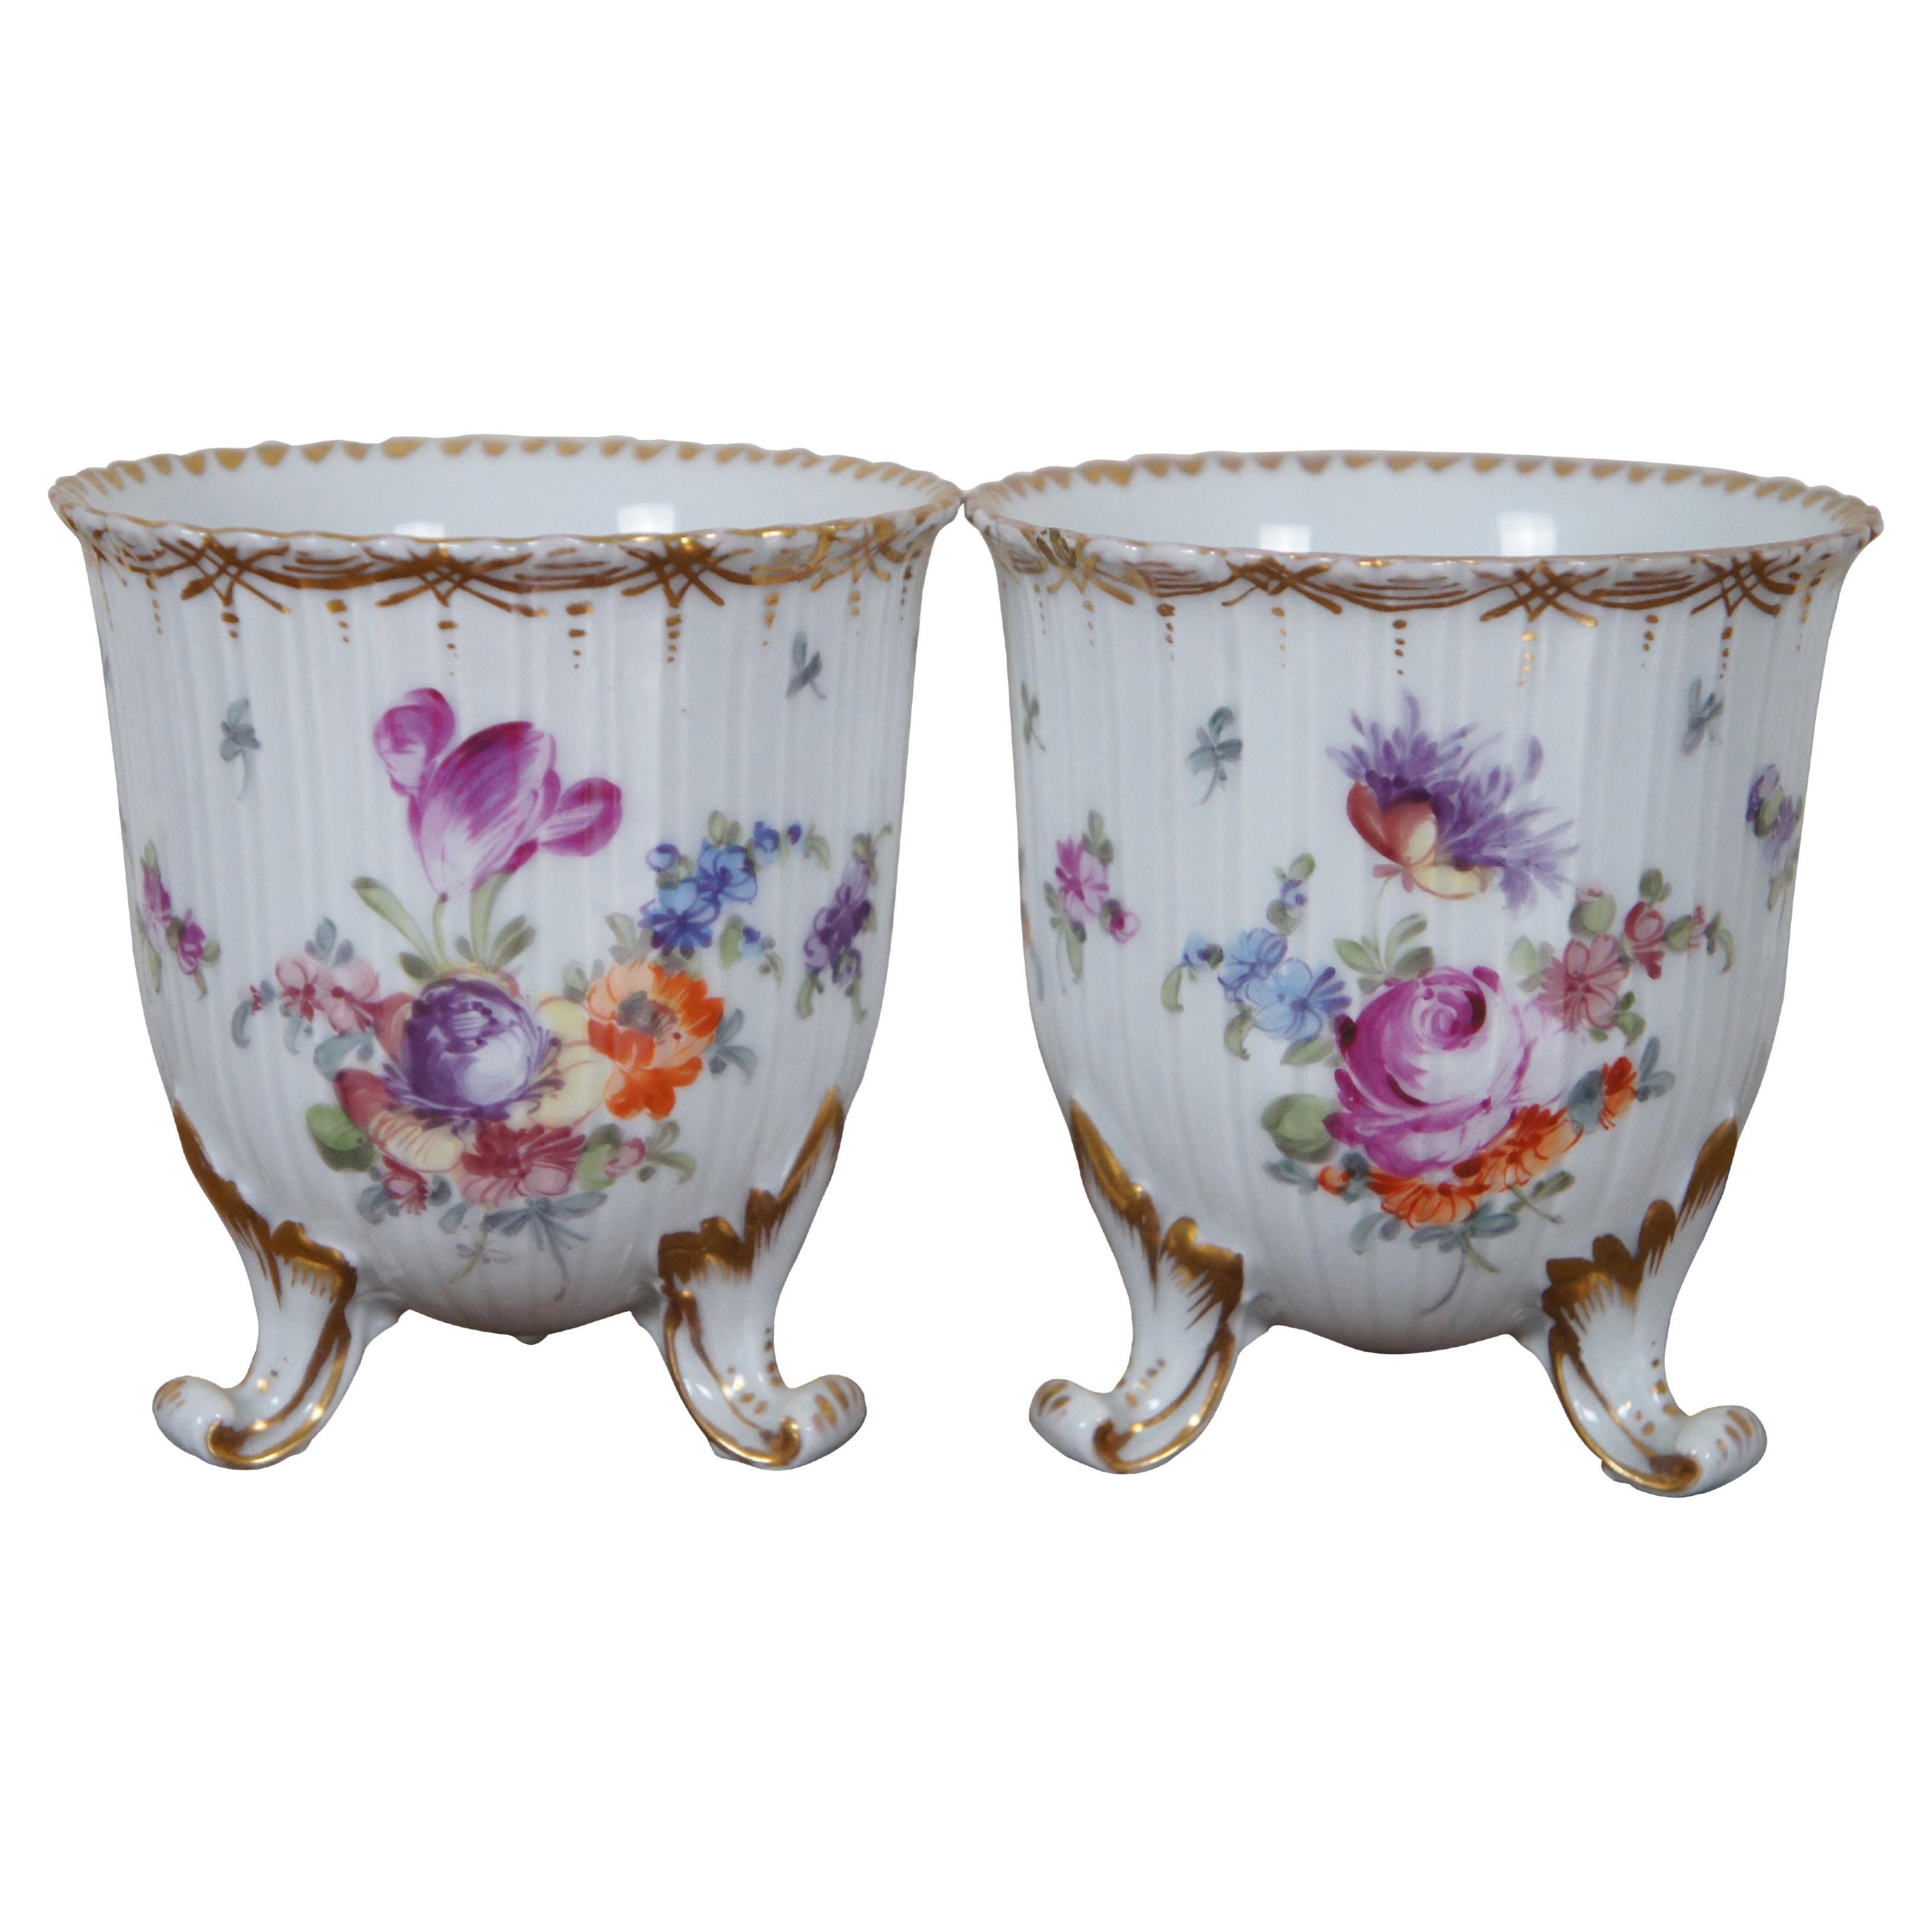 2 Franziska Hirsch Dresden Porcelain Polychrome Floral Vase Cachepots Pair 4" en vente